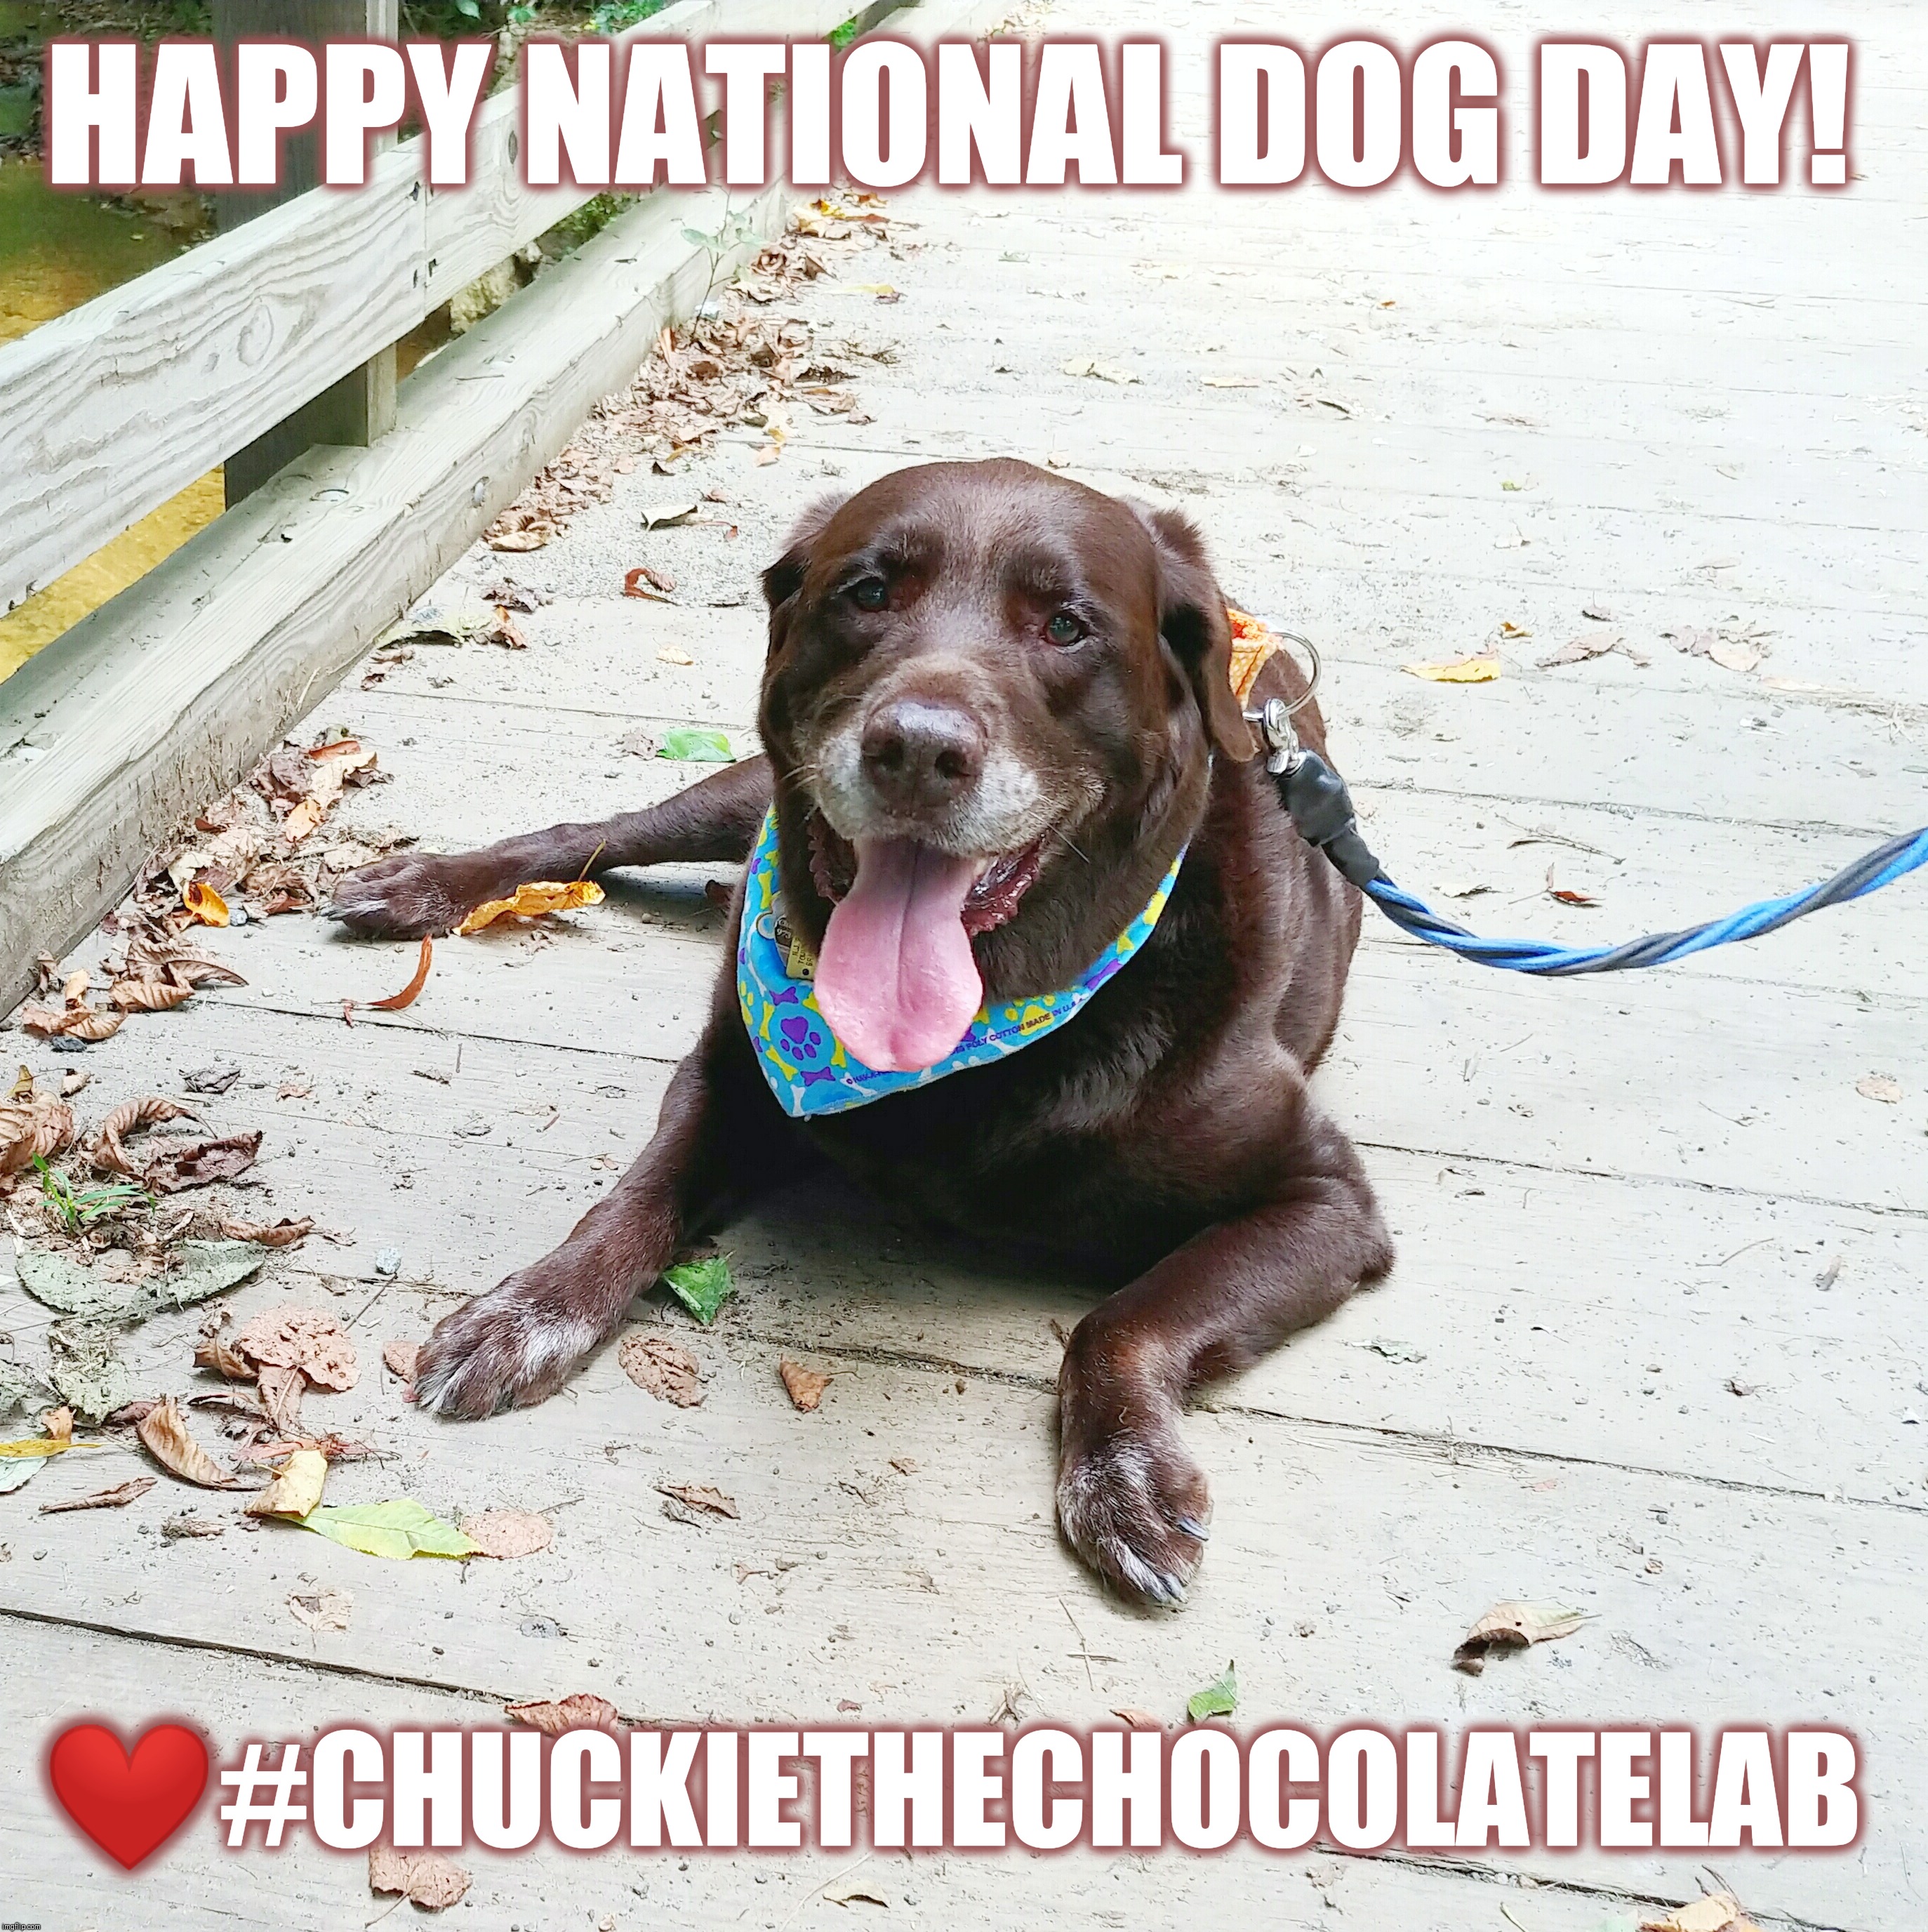 Happy National Dog Day |  HAPPY NATIONAL DOG DAY! ❤️#CHUCKIETHECHOCOLATELAB | image tagged in chuckie the chocolate lab,national dog day,dogs,memes,cute animals,labrador retriever | made w/ Imgflip meme maker